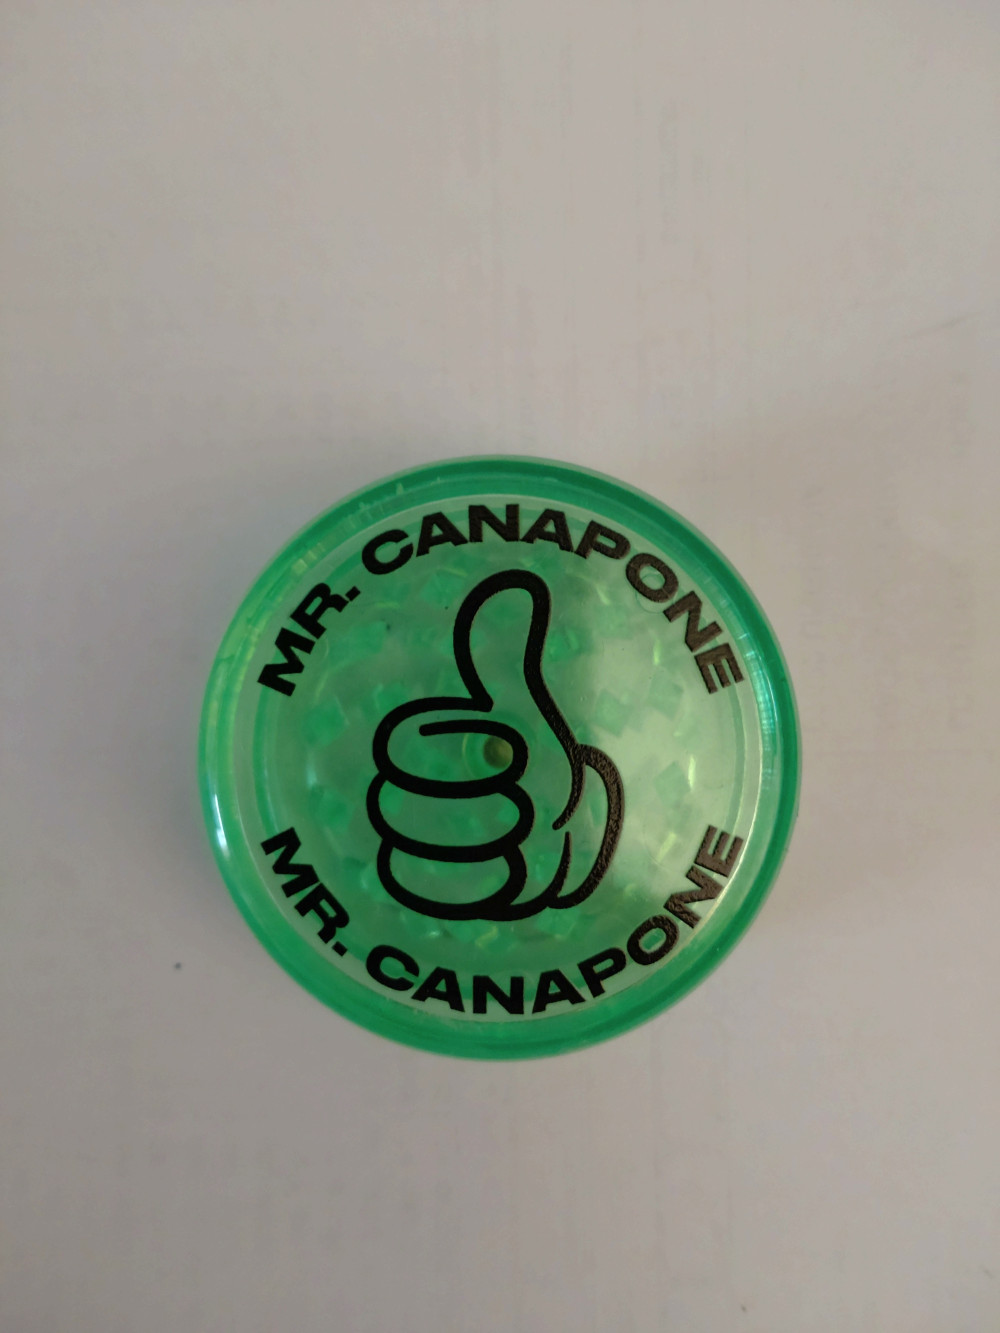 Mr. Canapone daráló /Grinder/ zöld